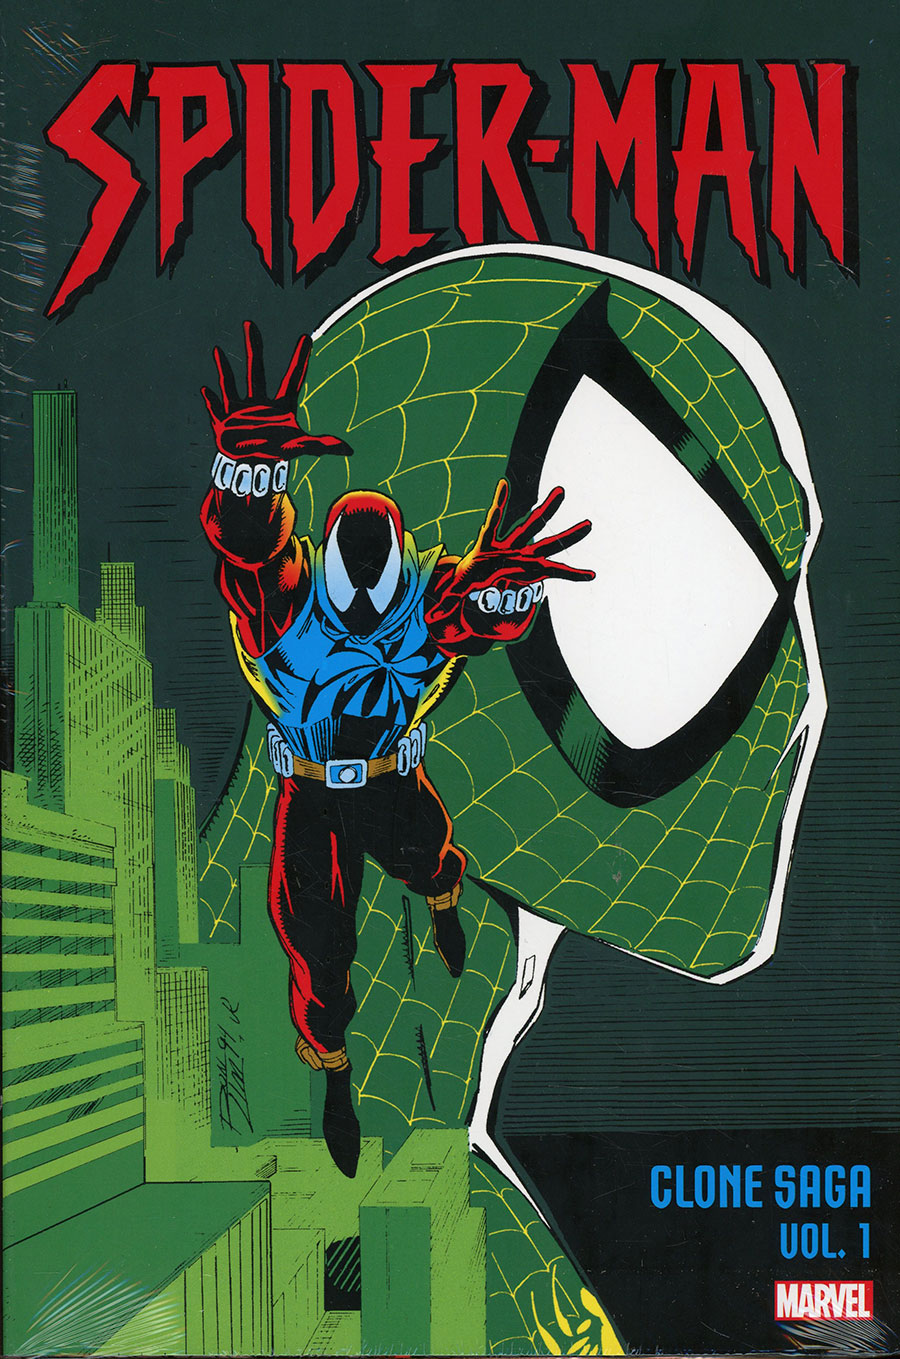 Spider-Man Clone Saga Omnibus Vol 1 HC Direct Market Ron Lim Variant Cover New Printing